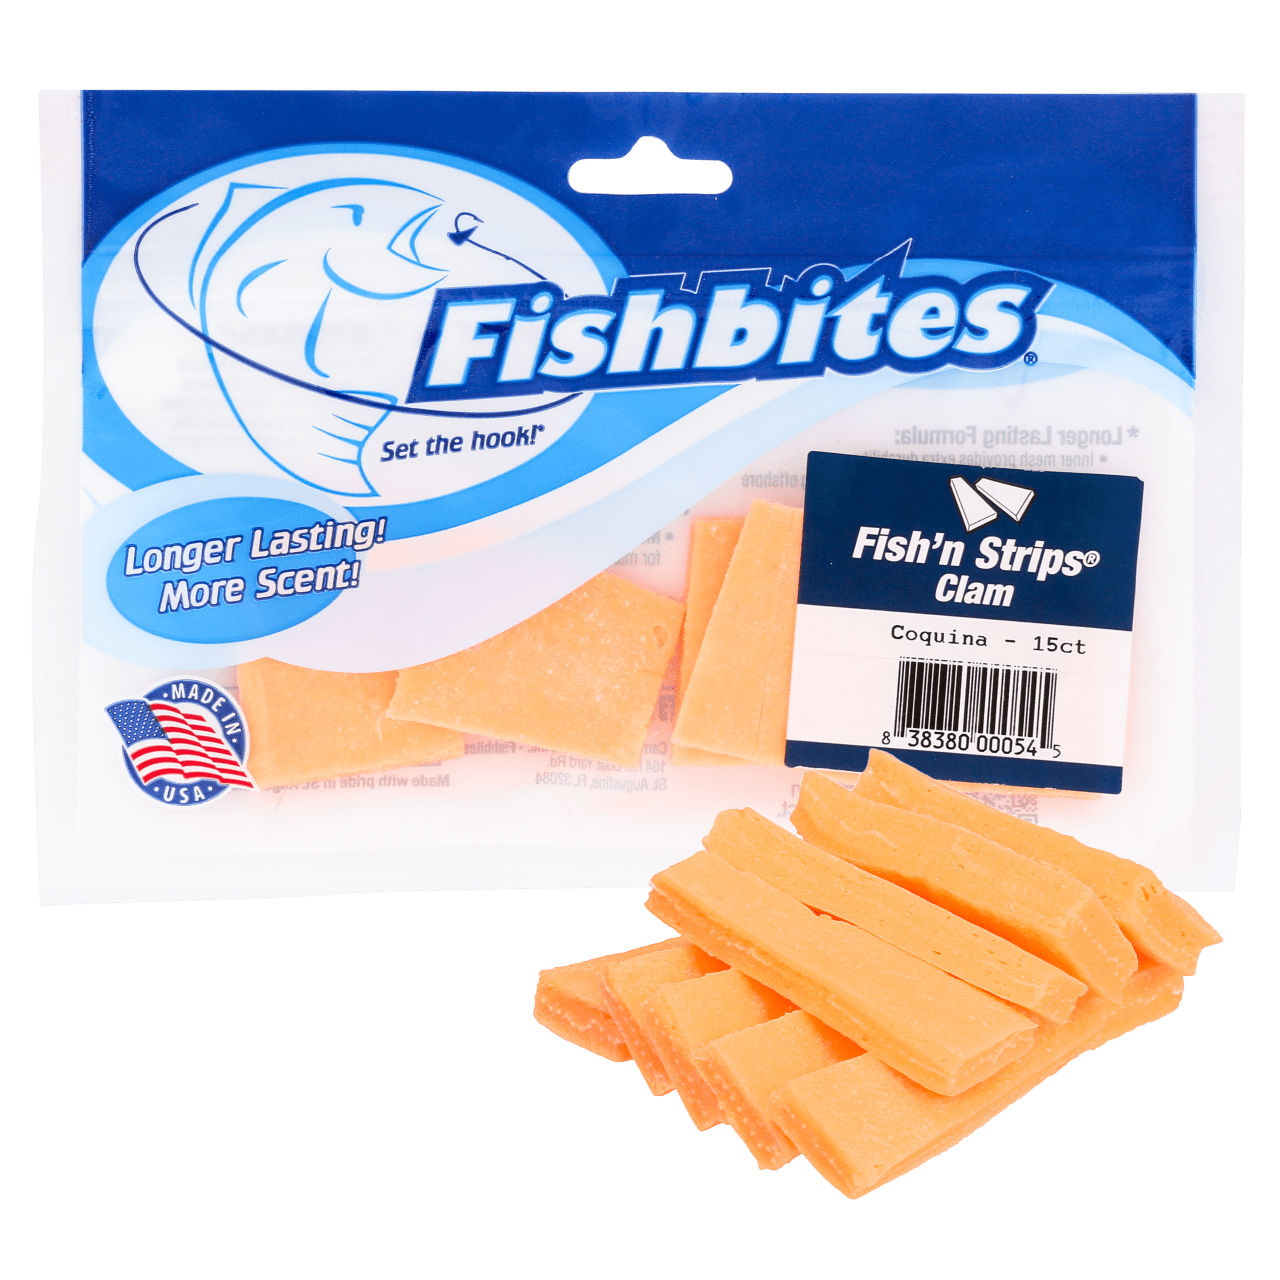 Fishbites Fish'n Strips Clam - Coquina